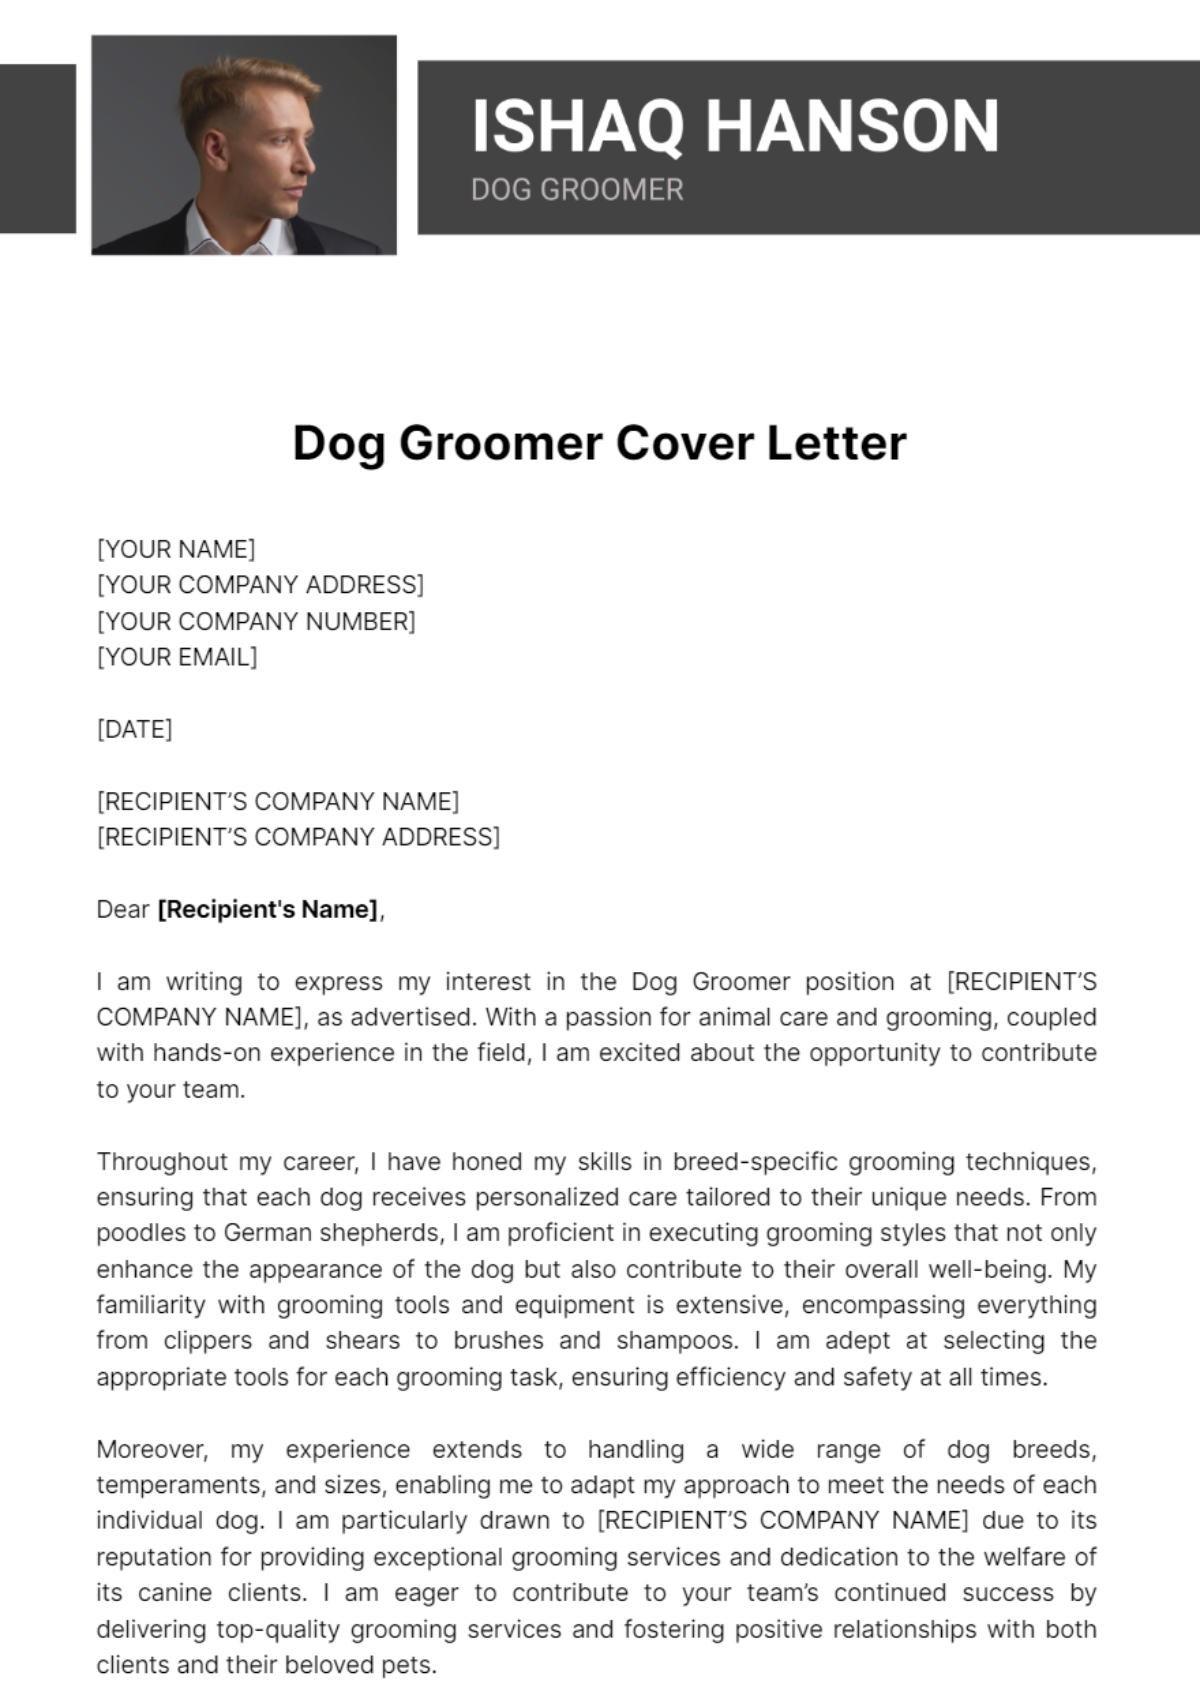 Dog Groomer Cover Letter Template